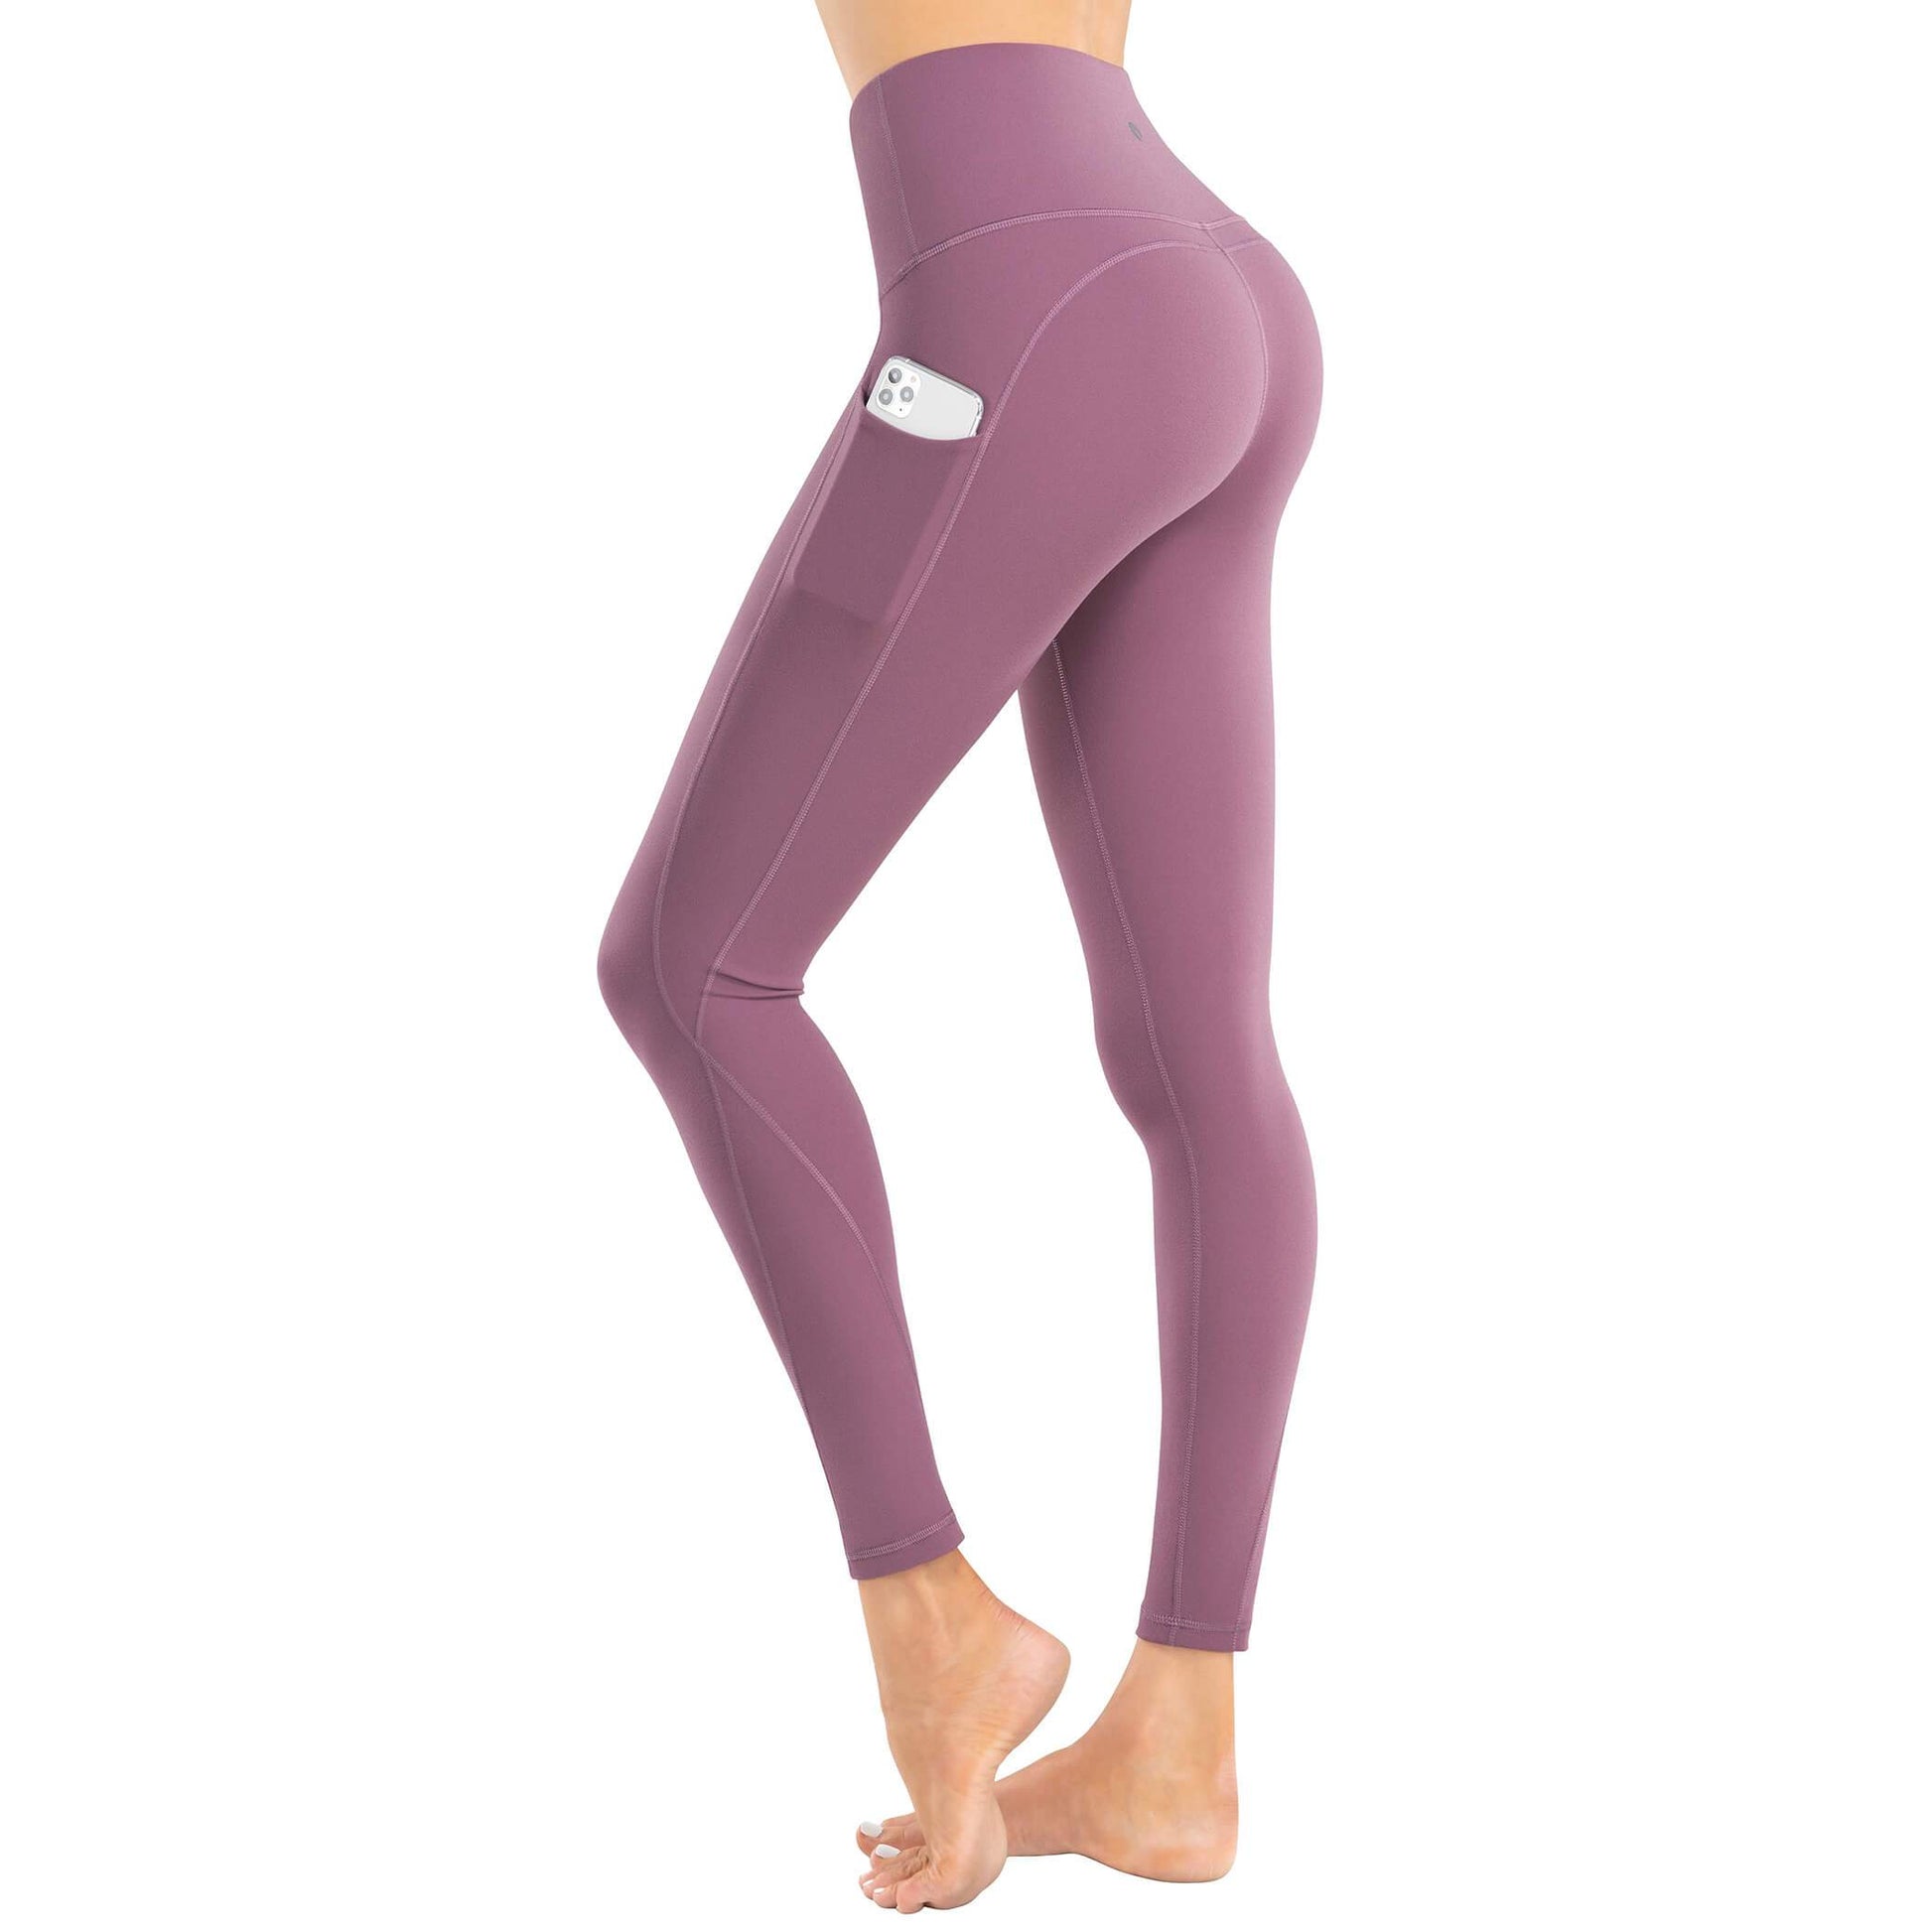 LEEy-World Workout Leggings Women's Stirrup Leggings High Waist Yoga Pants  for Women Pocket Extra Long Over The Heel Leggings Pink,XL 